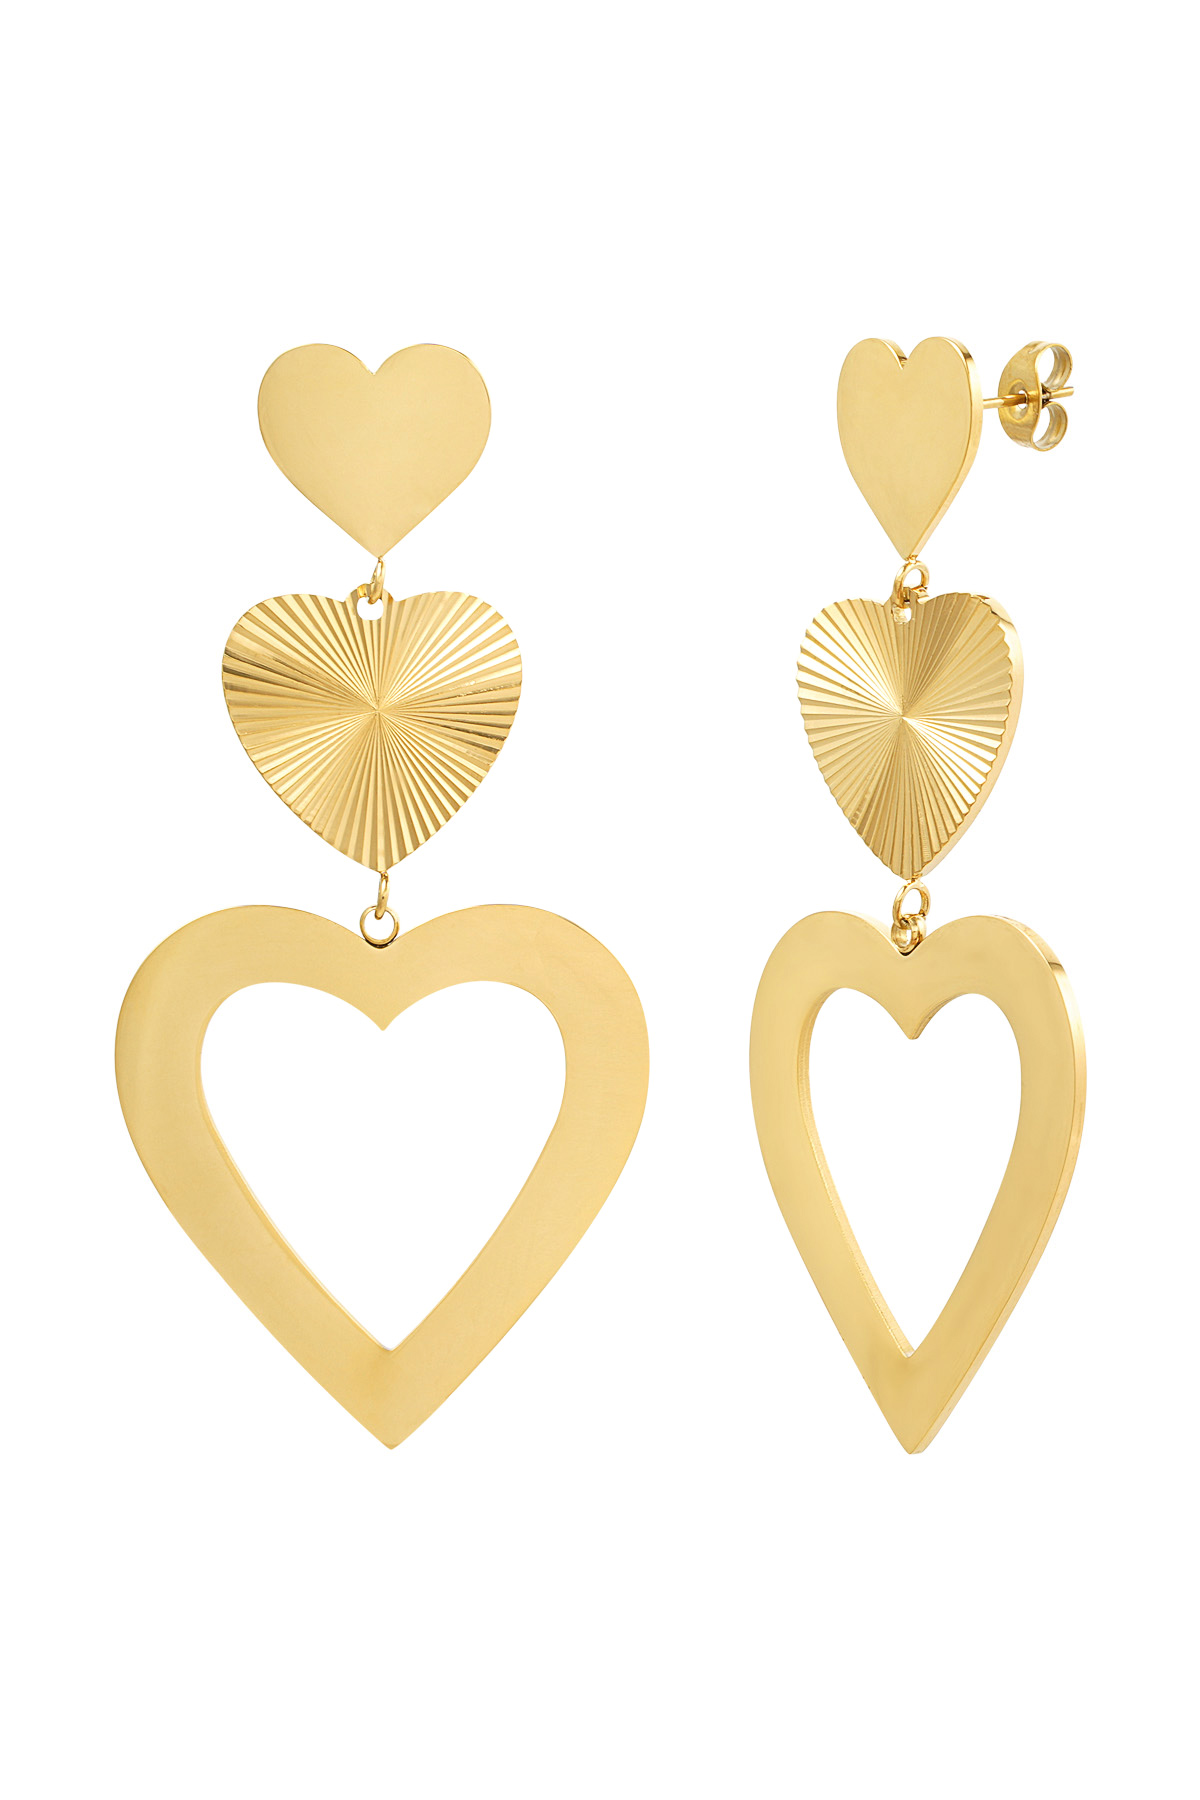 Earrings three hearts - gold 